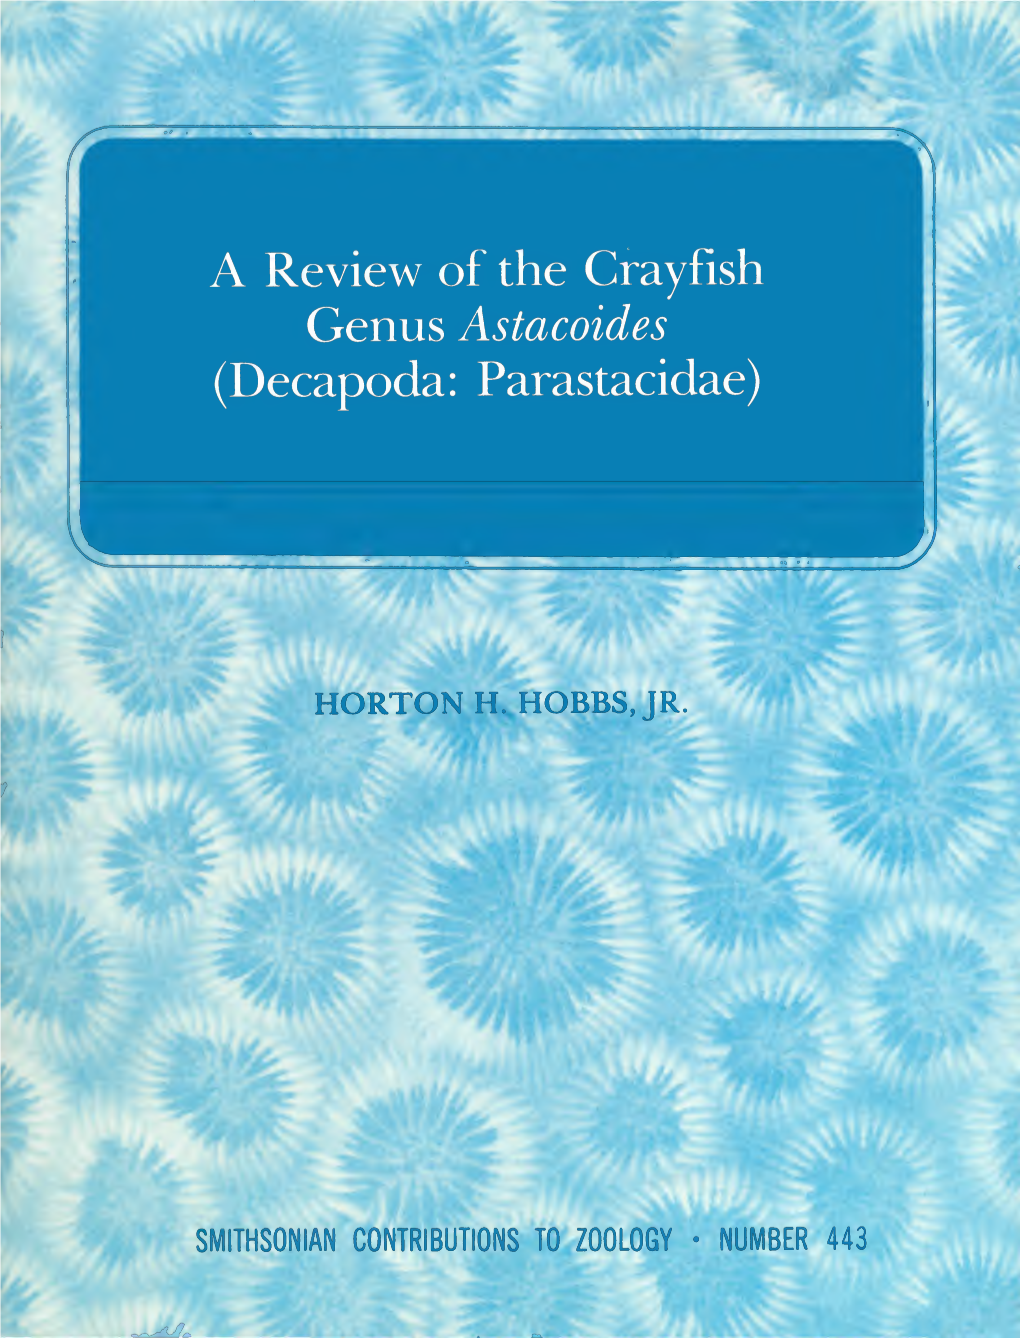 A Review of the Crayfish Genus Astacoides (Decapoda: Parastacidae)